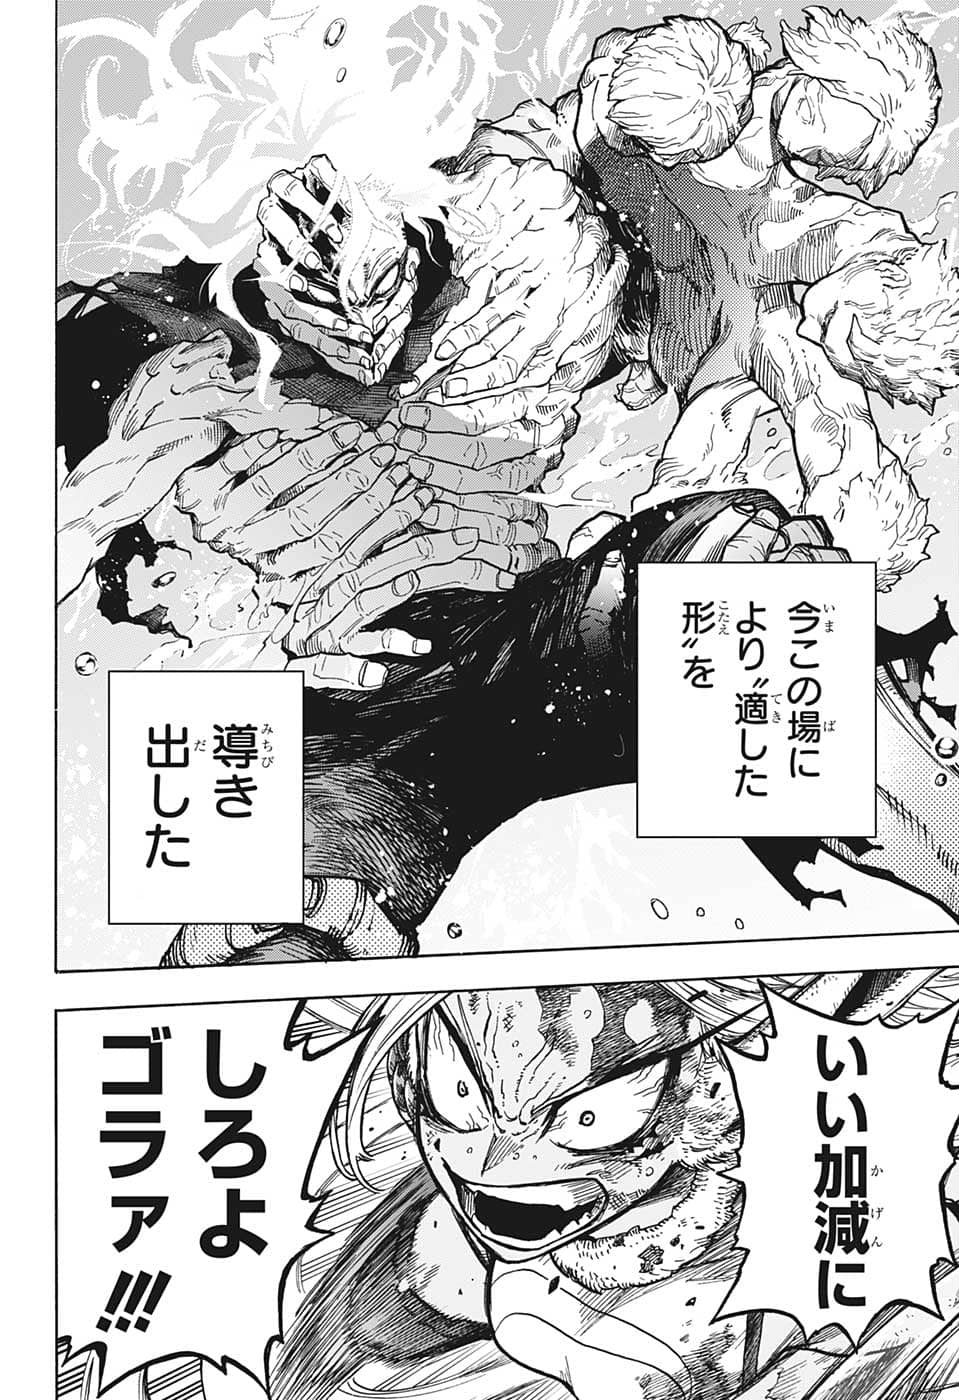 Boku no Hero Academia - Chapter 366 - Page 2